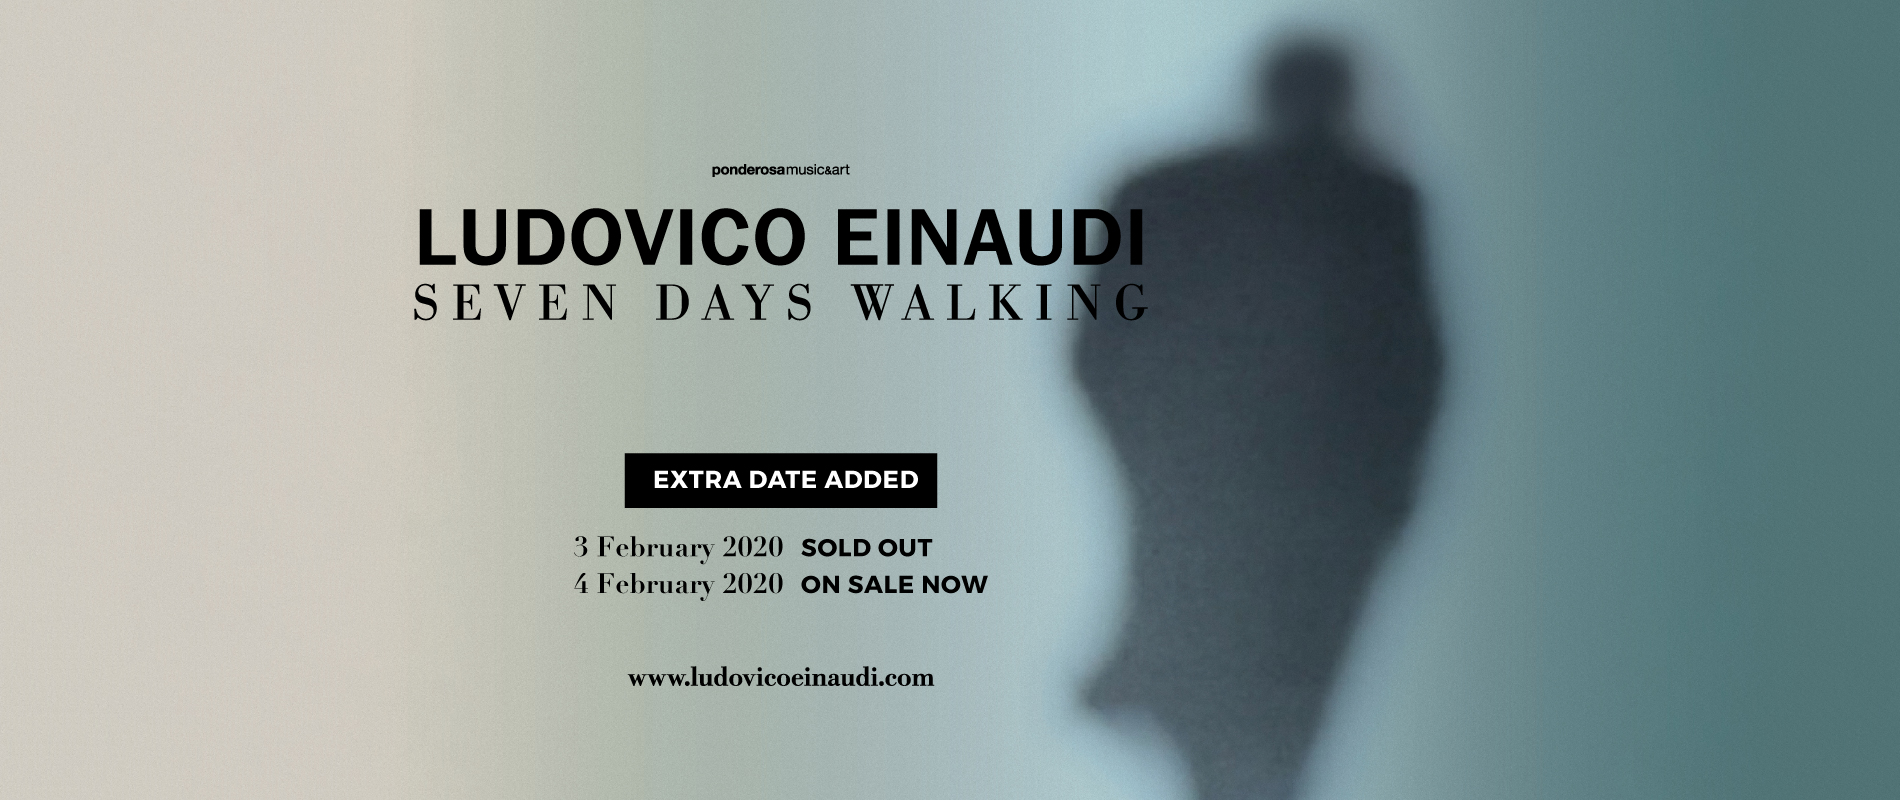 Ludovico Einaudi Live on Feb 3rd – 4th at Dubai Opera